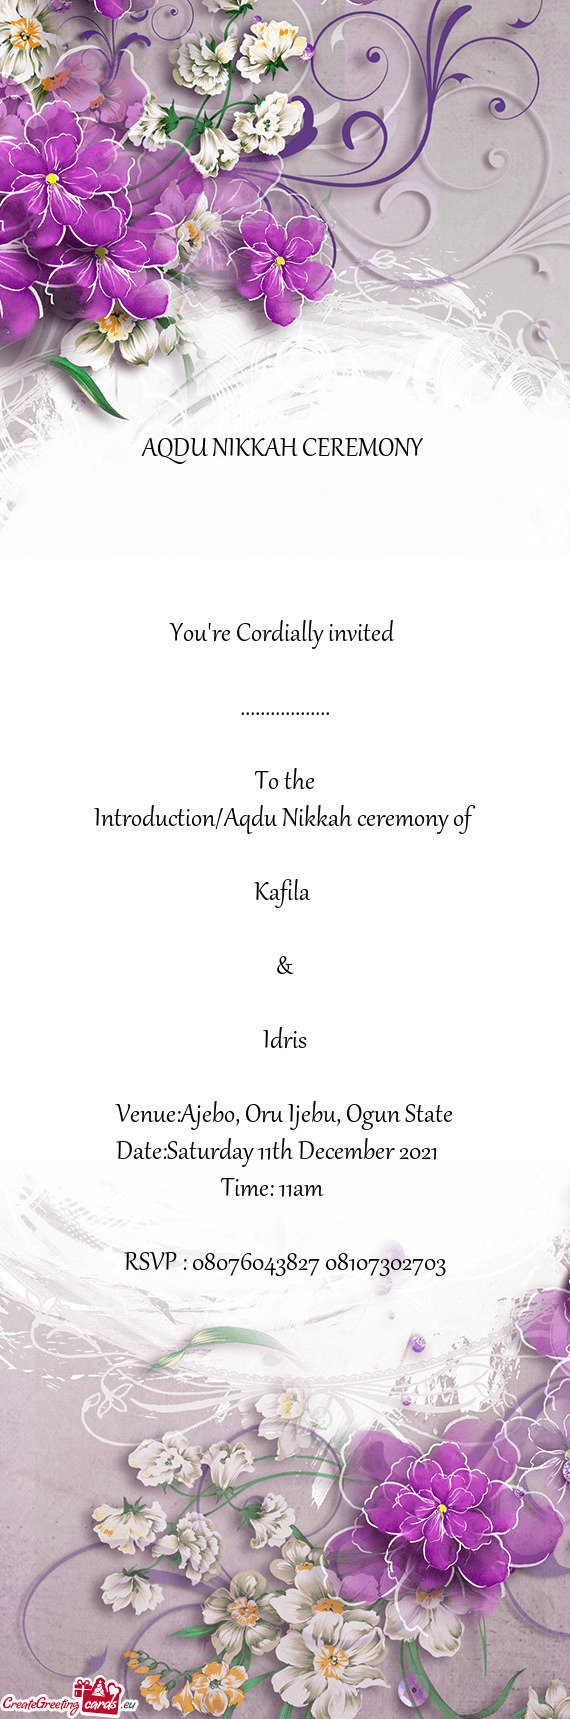 Introduction/Aqdu Nikkah ceremony of